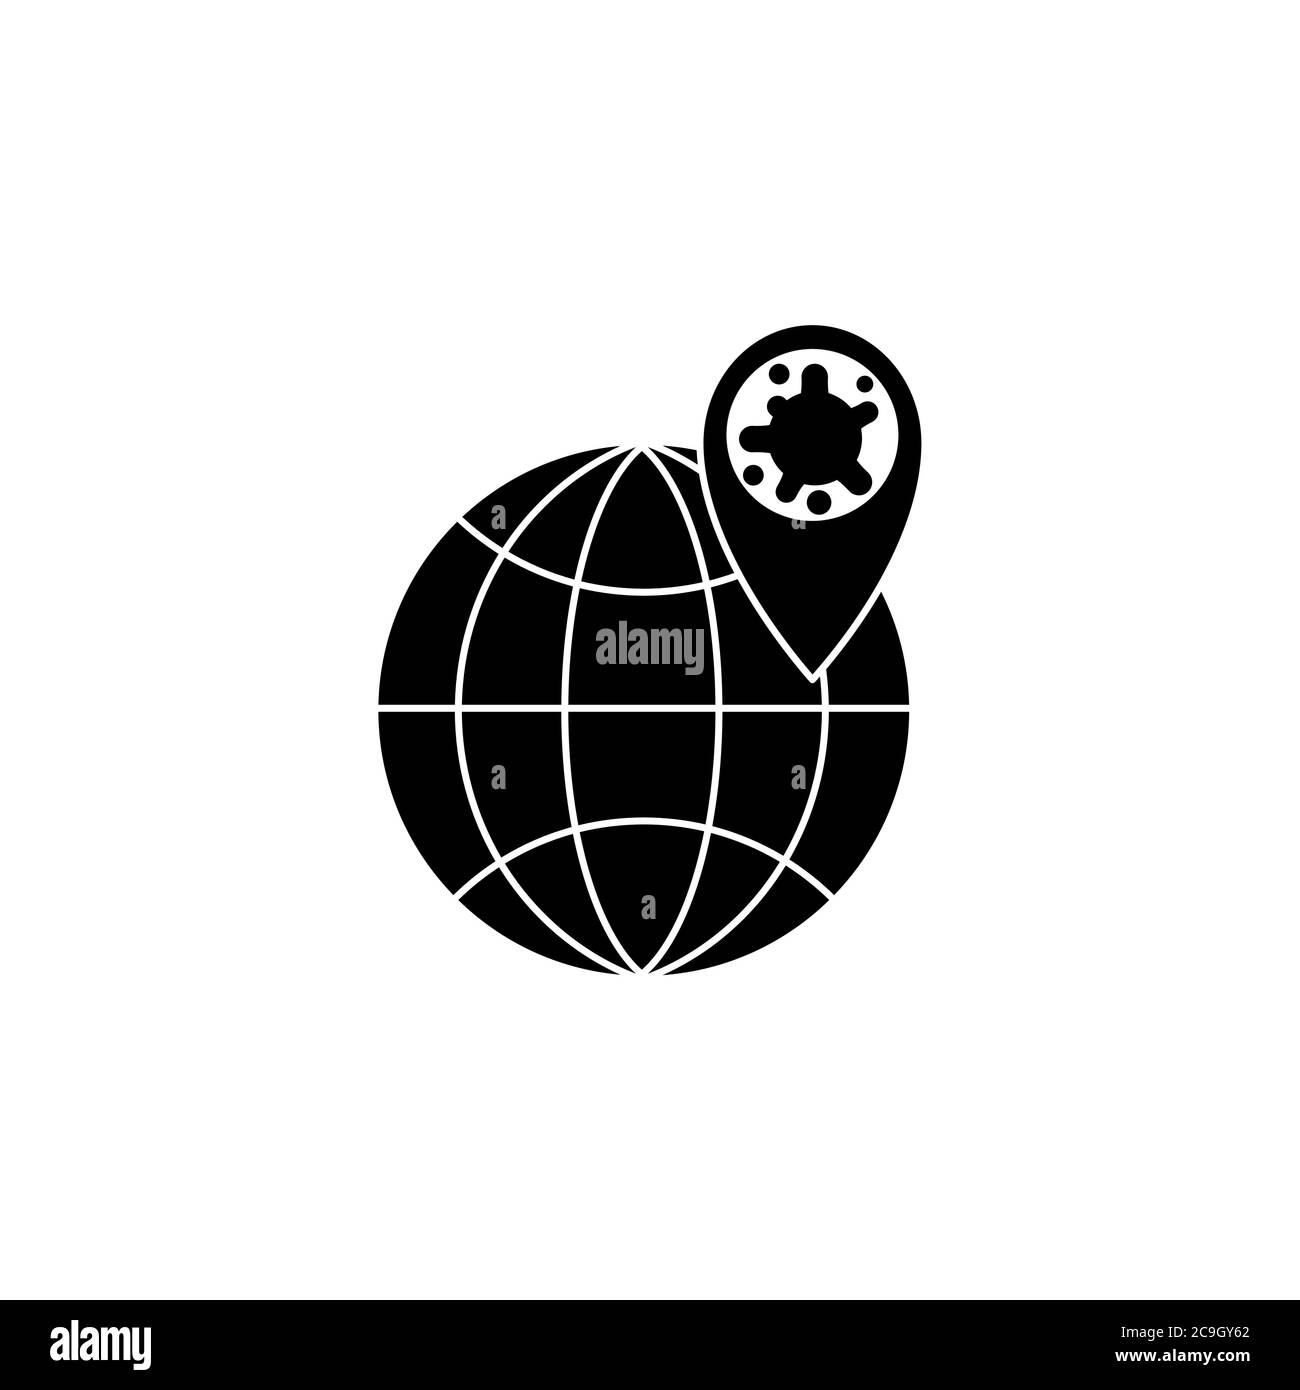 Virus, bacteria, map pointer and globe icon, symbol, sign. coronavirus, COVID-19 icon, logo black on white background. 2019-ncov Stock Vector